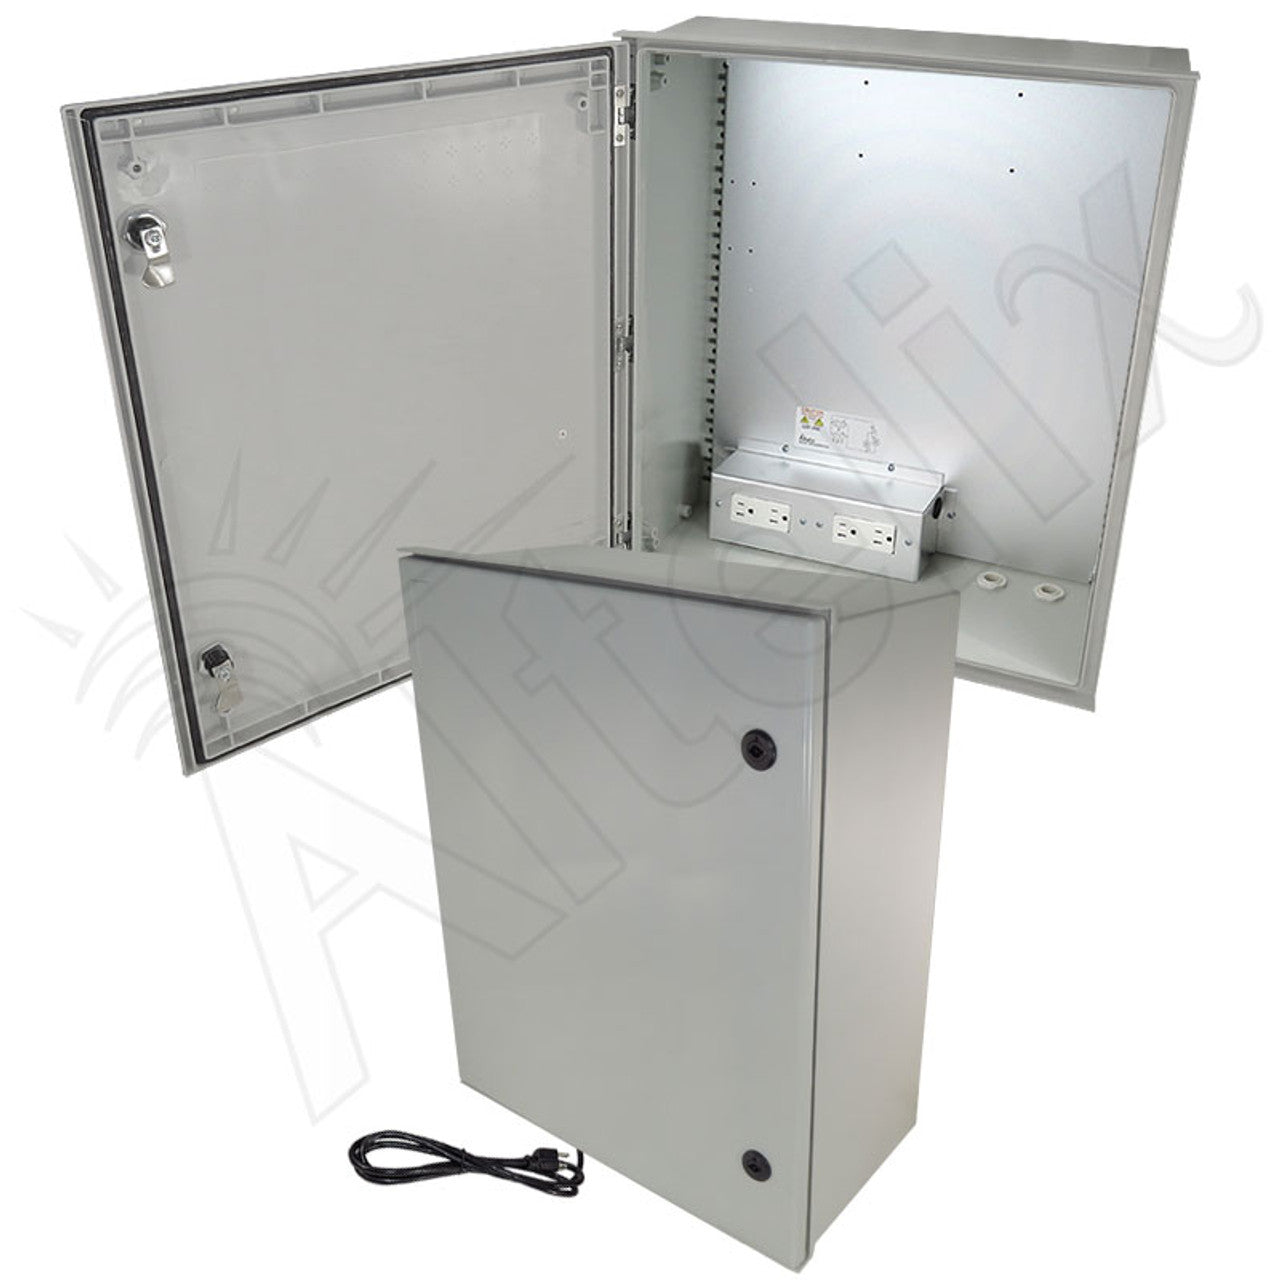 Altelix NEMA 4X Heated Fiberglass Weatherproof Enclosure with Equipment Mounting Plate, 120 VAC Outlets & Power Cord-6